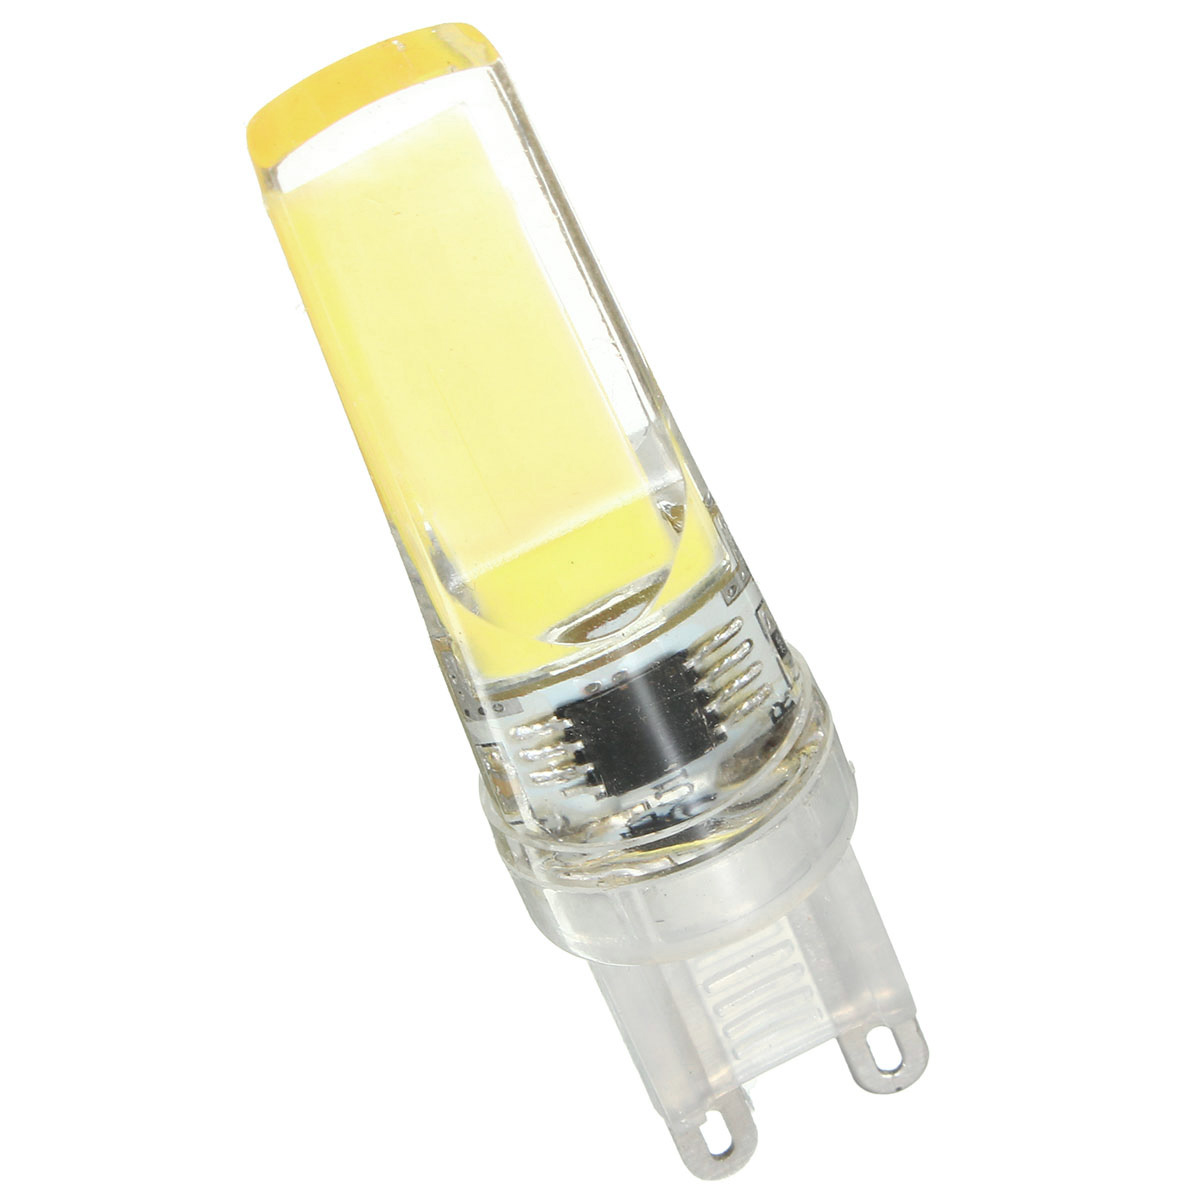 Dimmable-G9-LED-3W-Pure-White-Warm-White-COB-LED-Light-Lamp-Bulb-AC220V-1062193-9